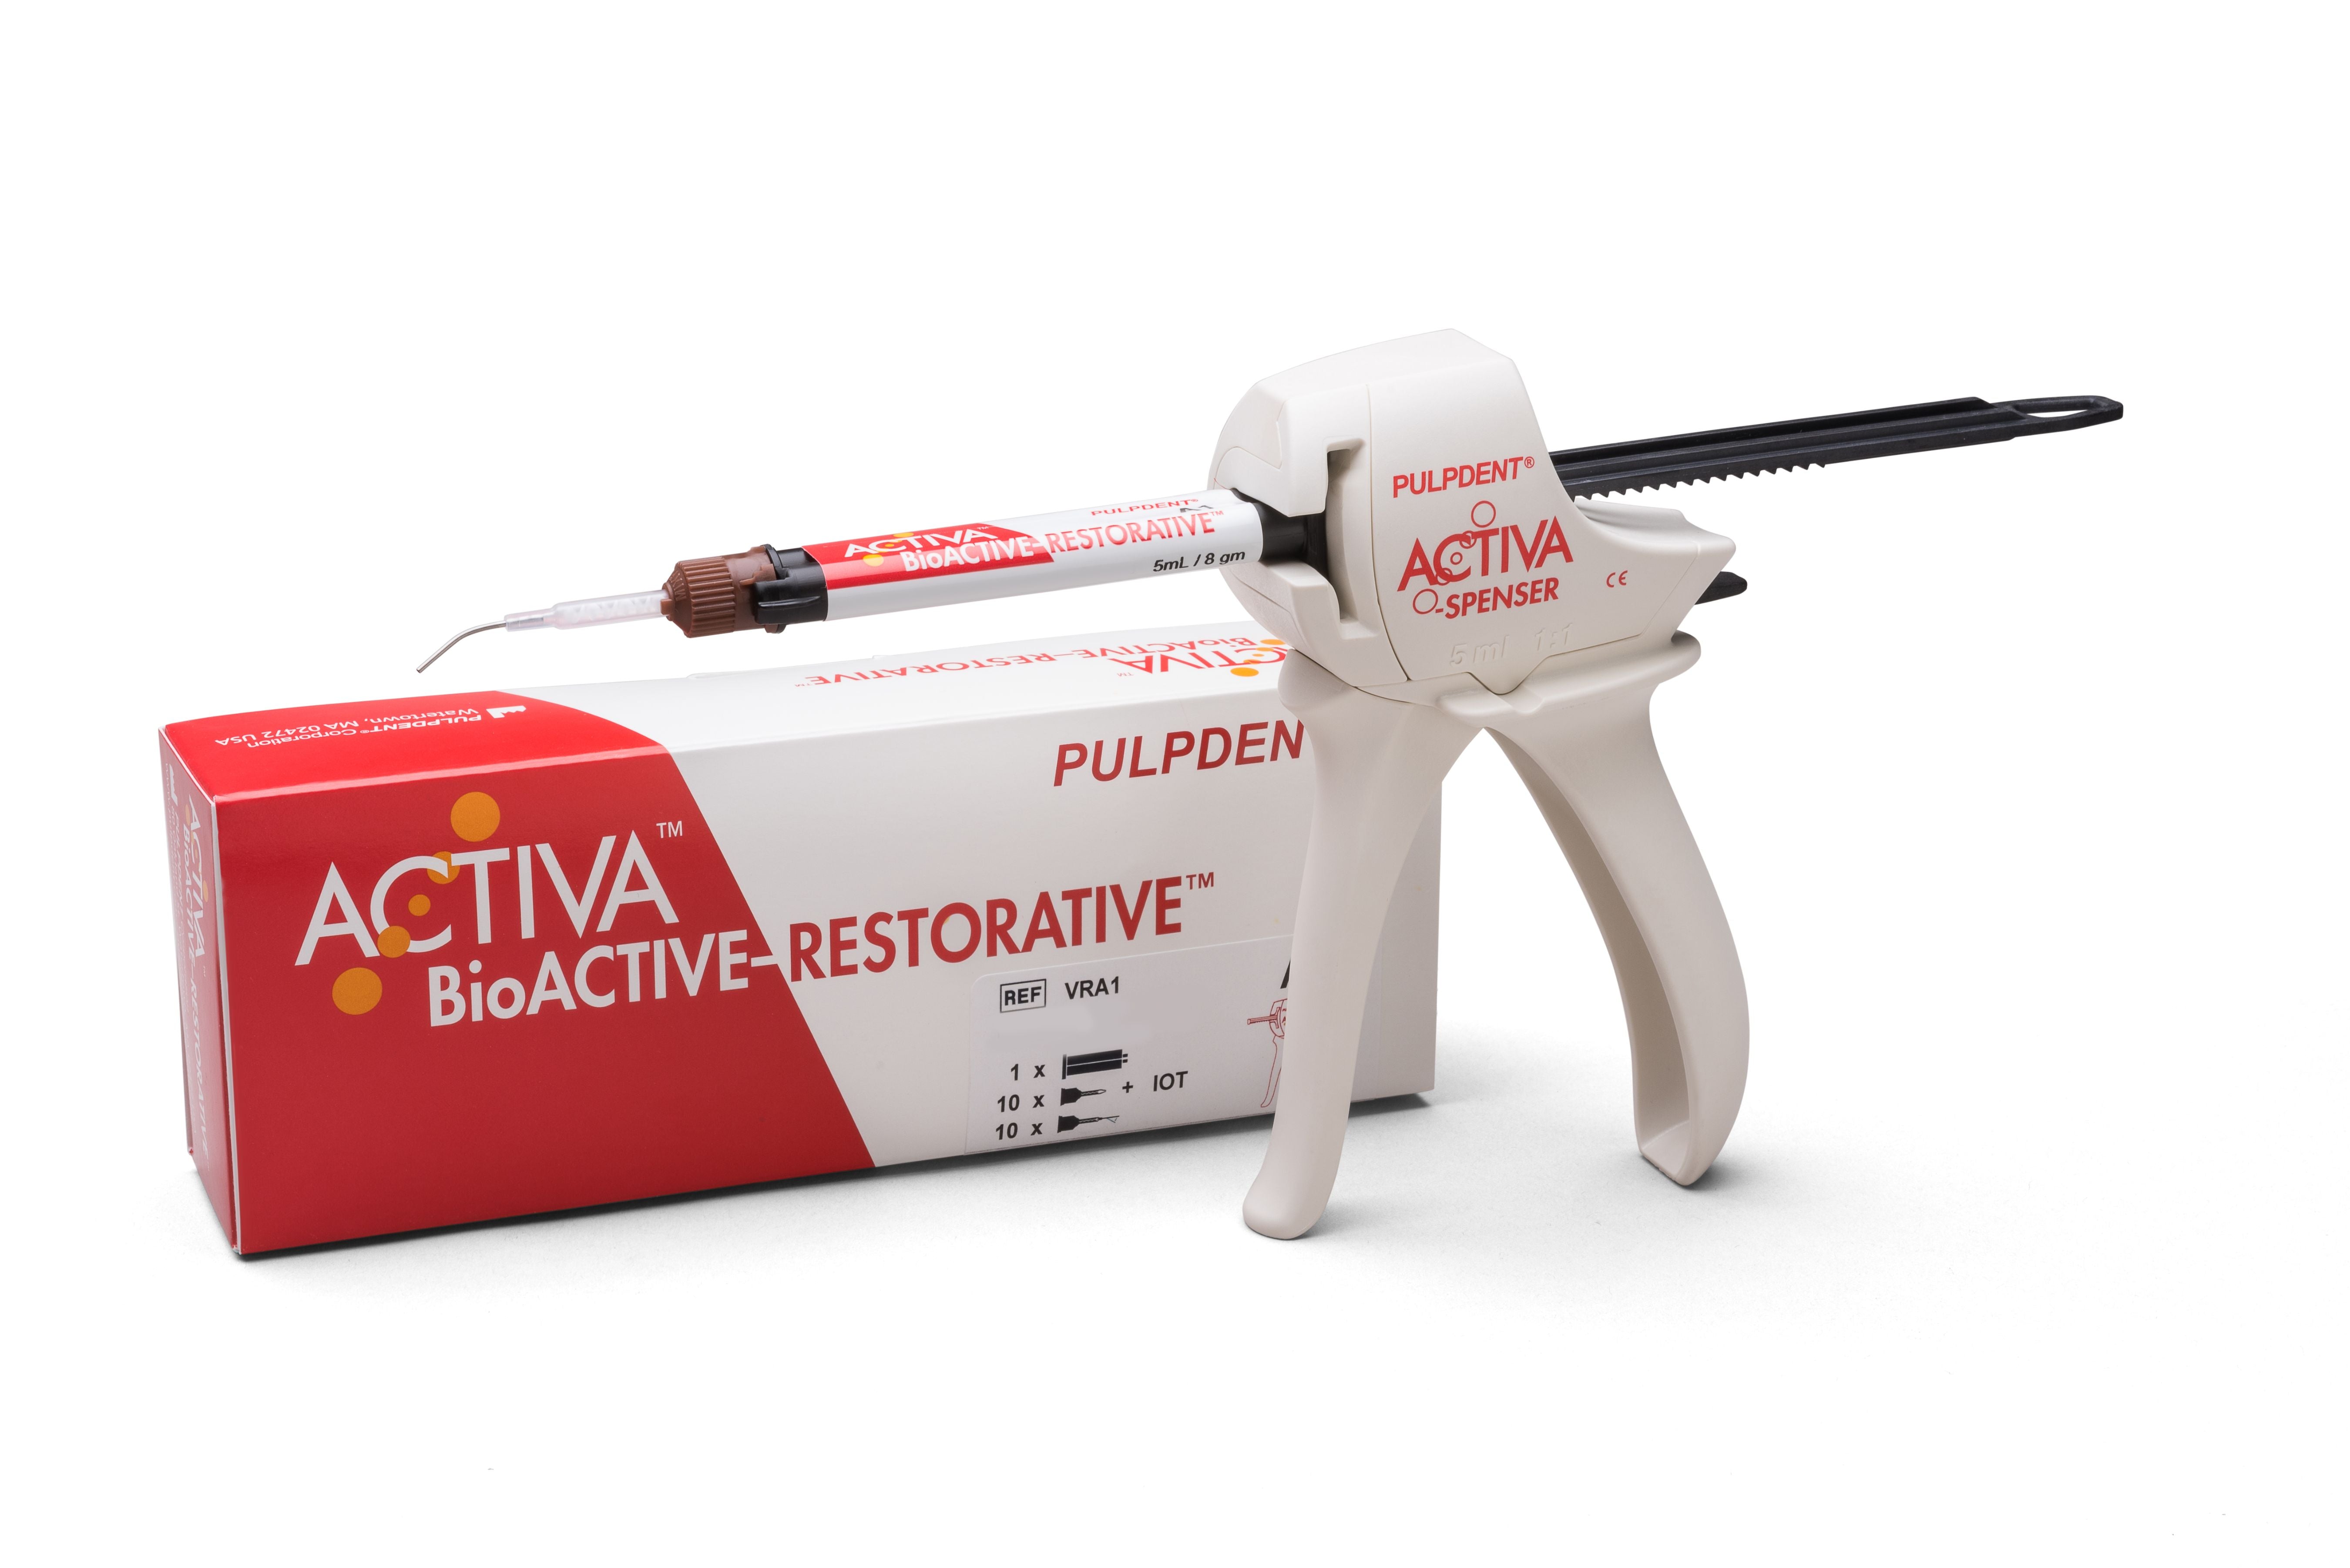 ACTIVA BioACTIVE Restorative